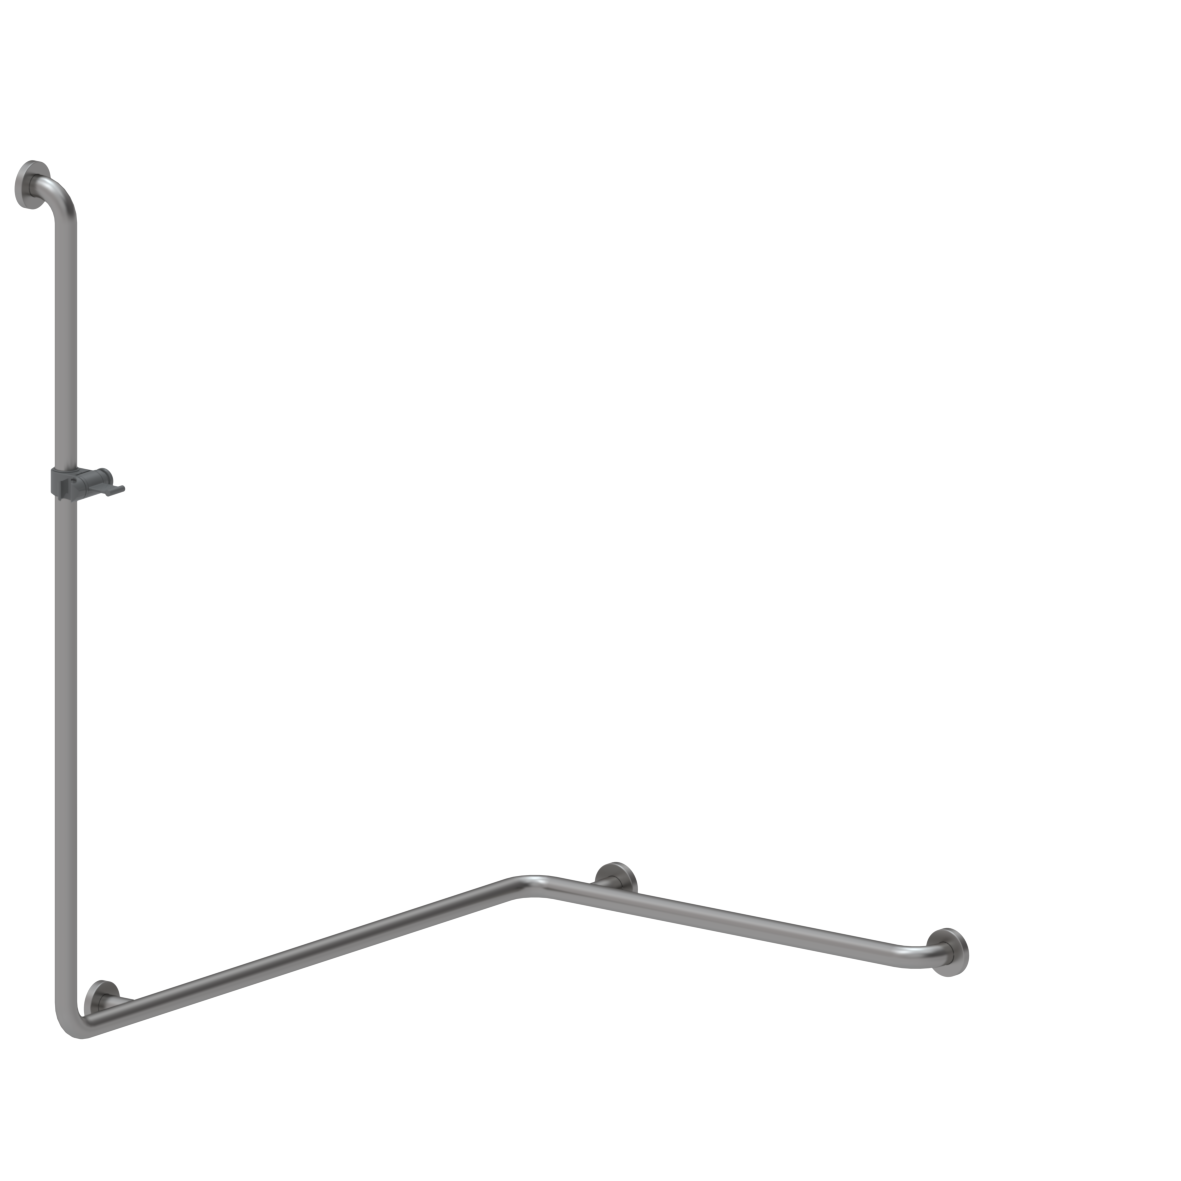 Inox Care Shower handrail, with shower head rail, left, 1100 x 750 x 1200 mm, Stainless steel, shower head holder, colour dark grey (018)